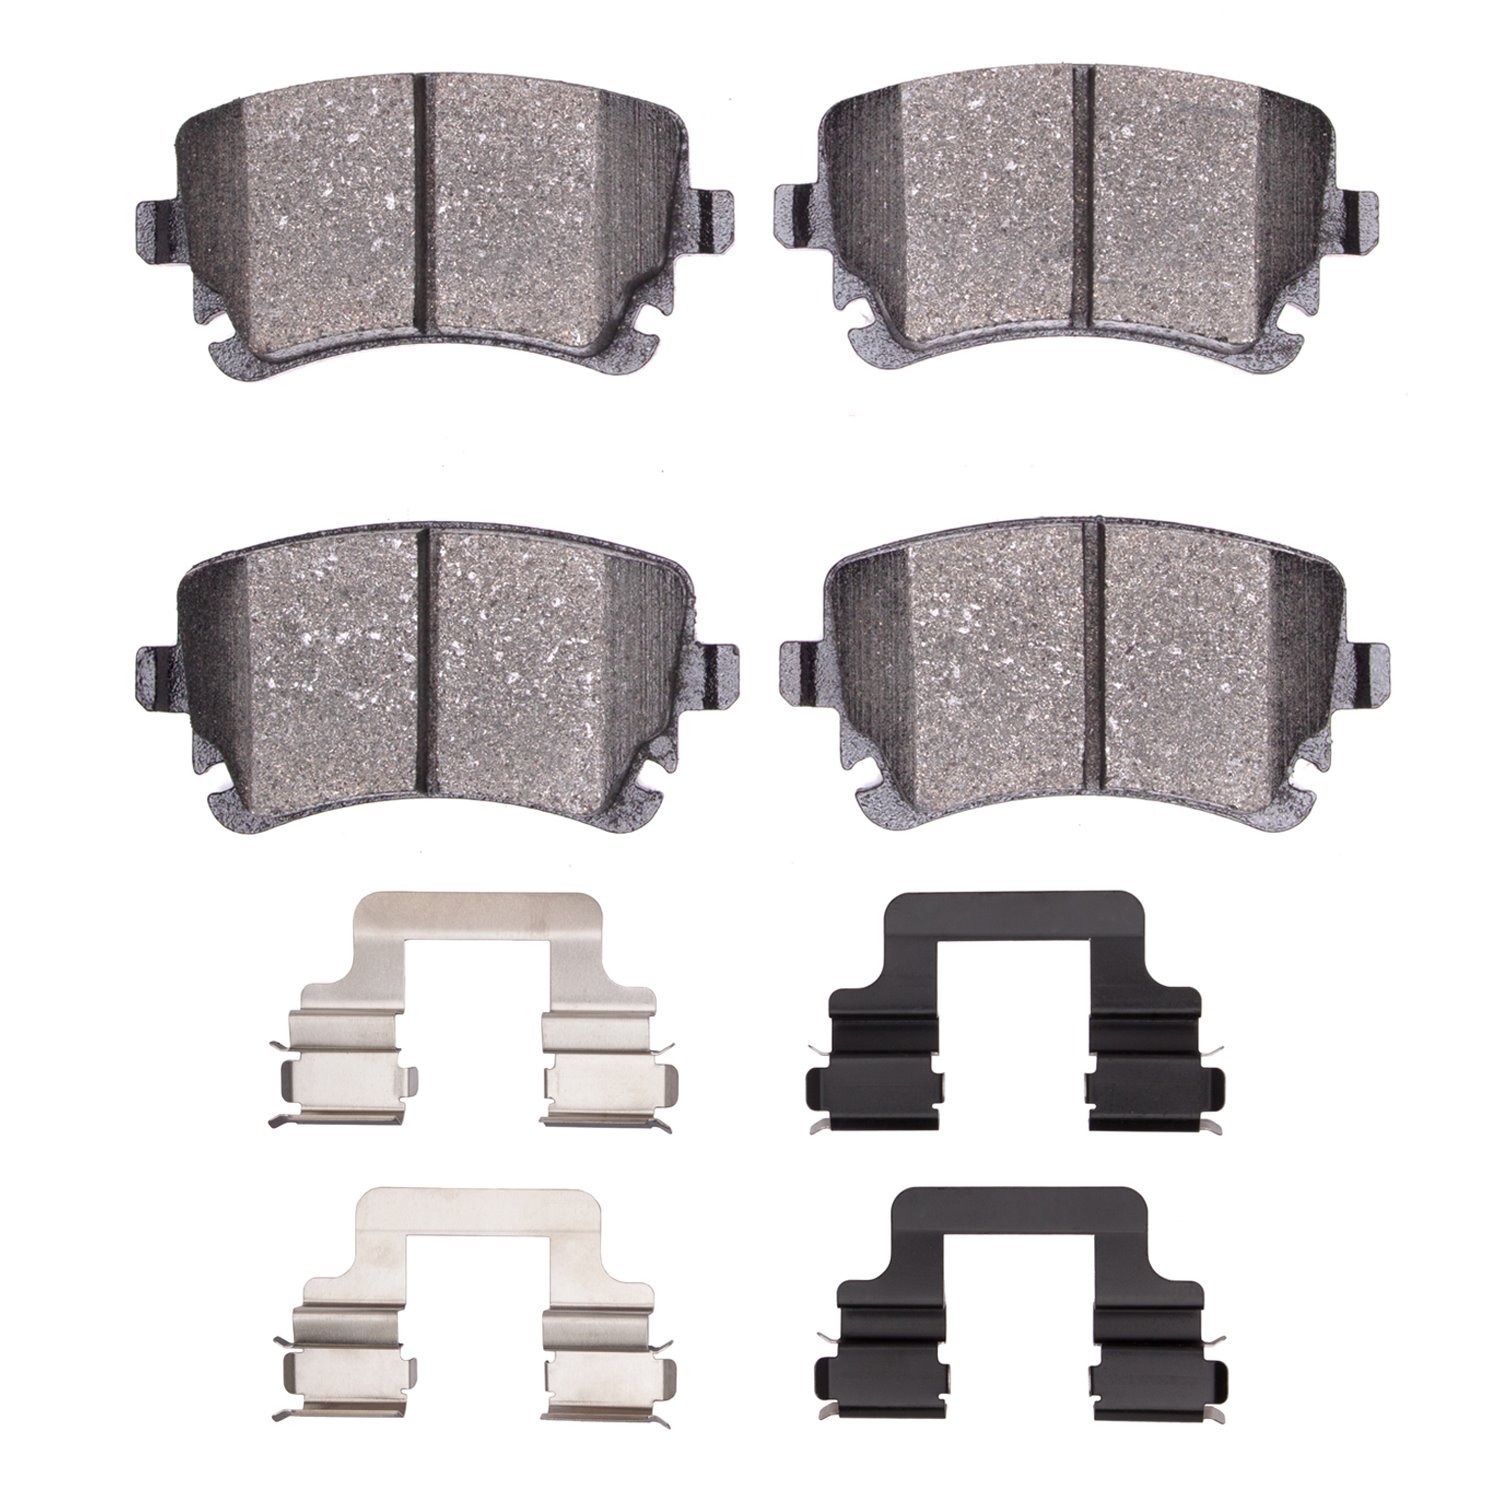 1310-1018-01 3000-Series Ceramic Brake Pads & Hardware Kit, 2003-2018 Multiple Makes/Models, Position: Rear